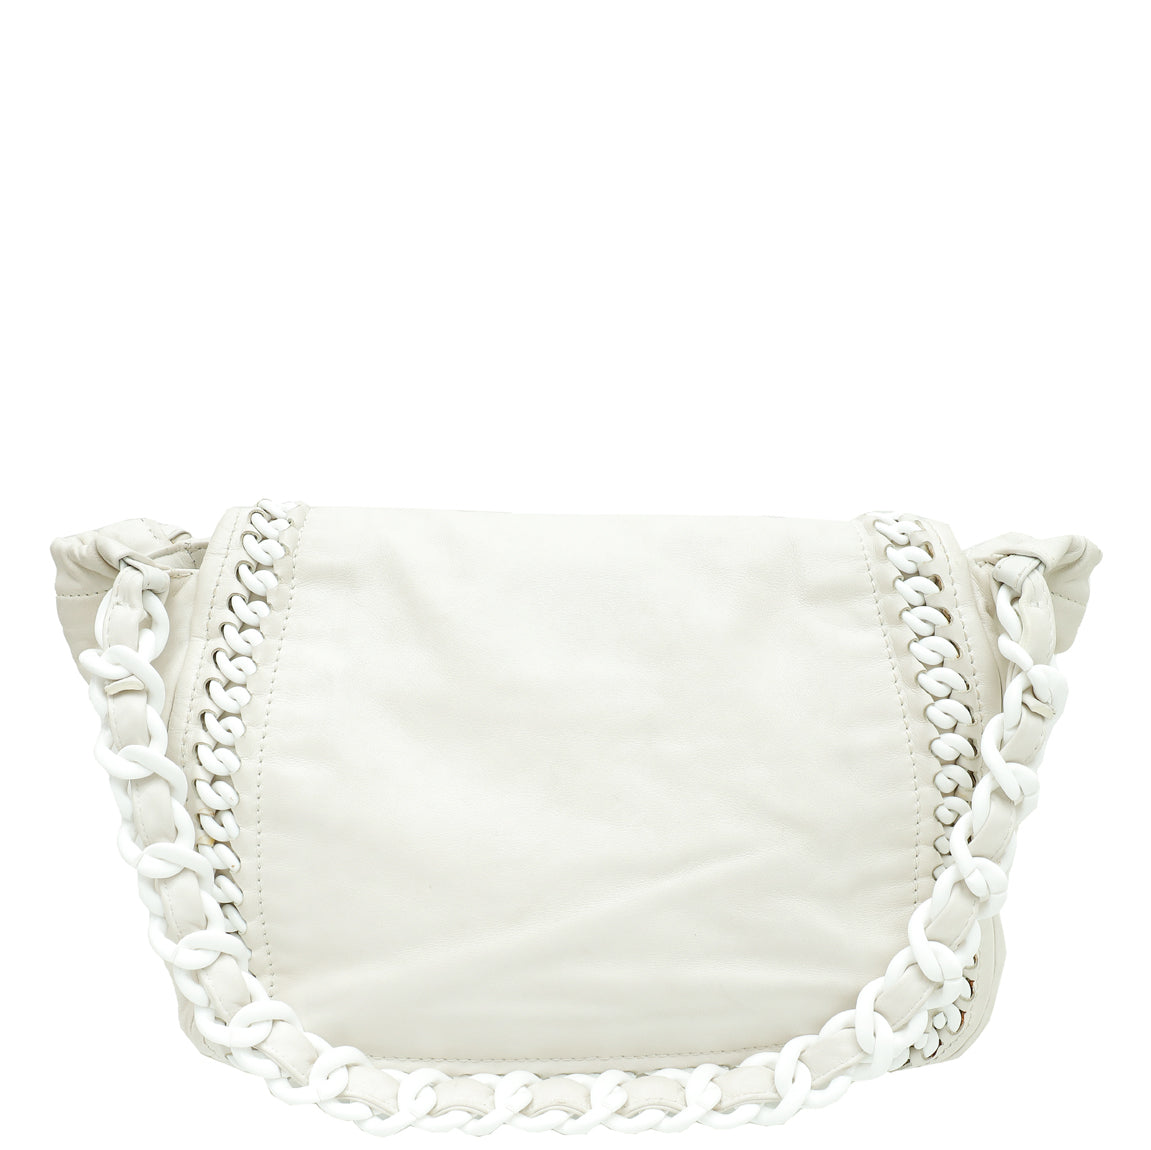 Chanel White CC Luxe Ligne Accordion Flap Bag